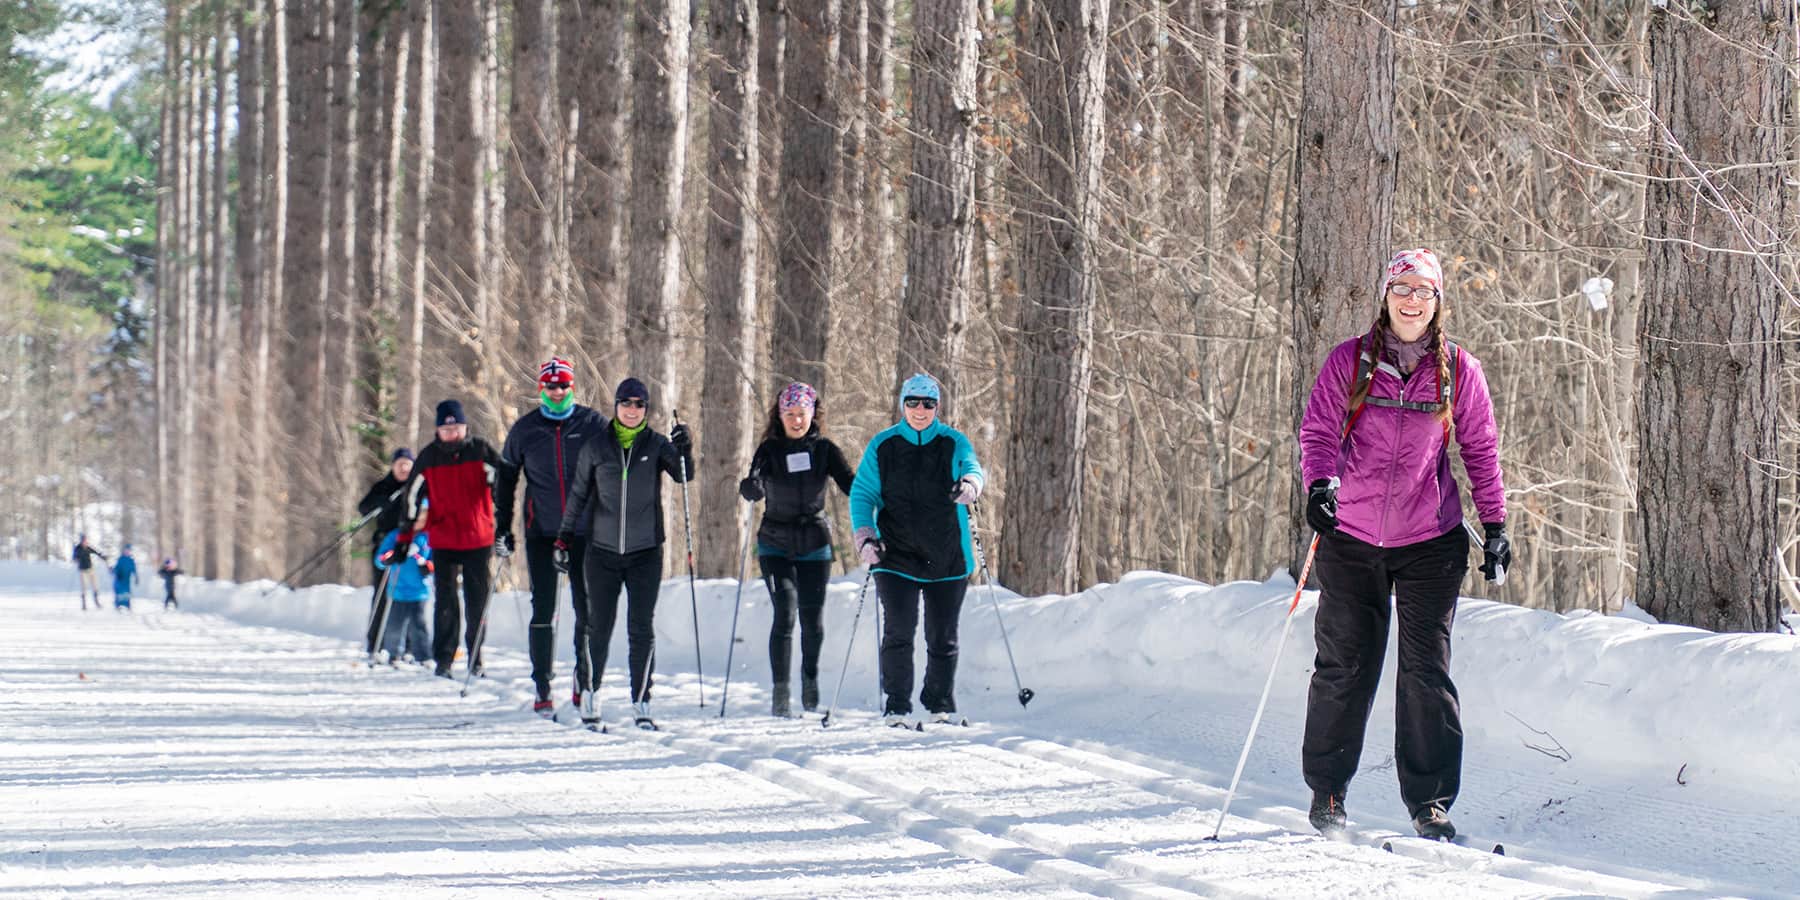 Cross country skiing at Hiawatha Highlands/Soo Finnish Nordic Ski Club